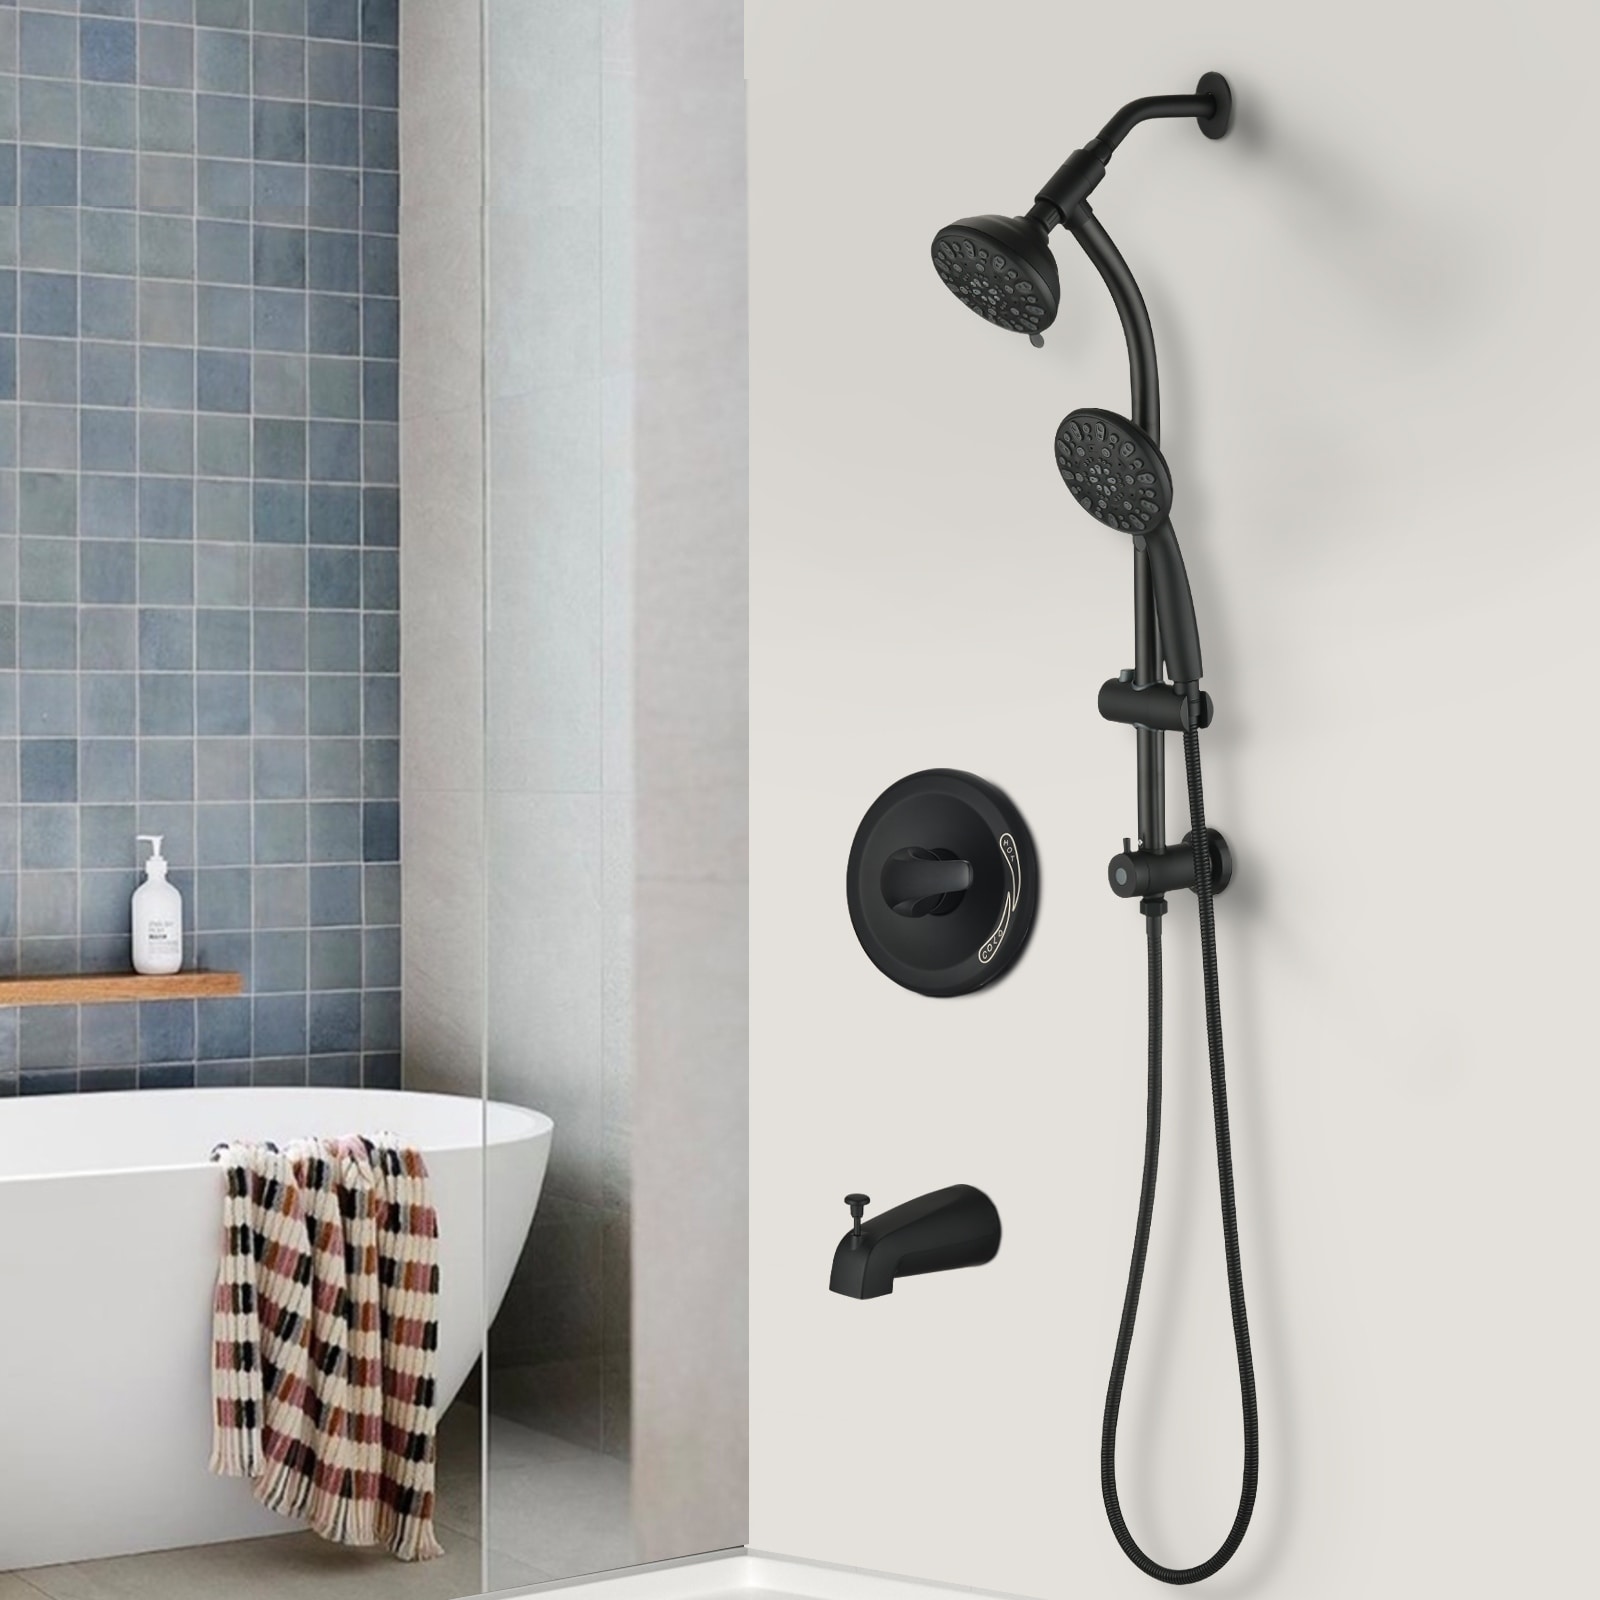 https://ak1.ostkcdn.com/images/products/is/images/direct/78190151f8732dccbefabece518cd3741b2280c4/YASINU-Handheld-Shower-Slide-Bar-Shower-Faucets-Sets-Complete-Including-Rough-in-Valve.jpg